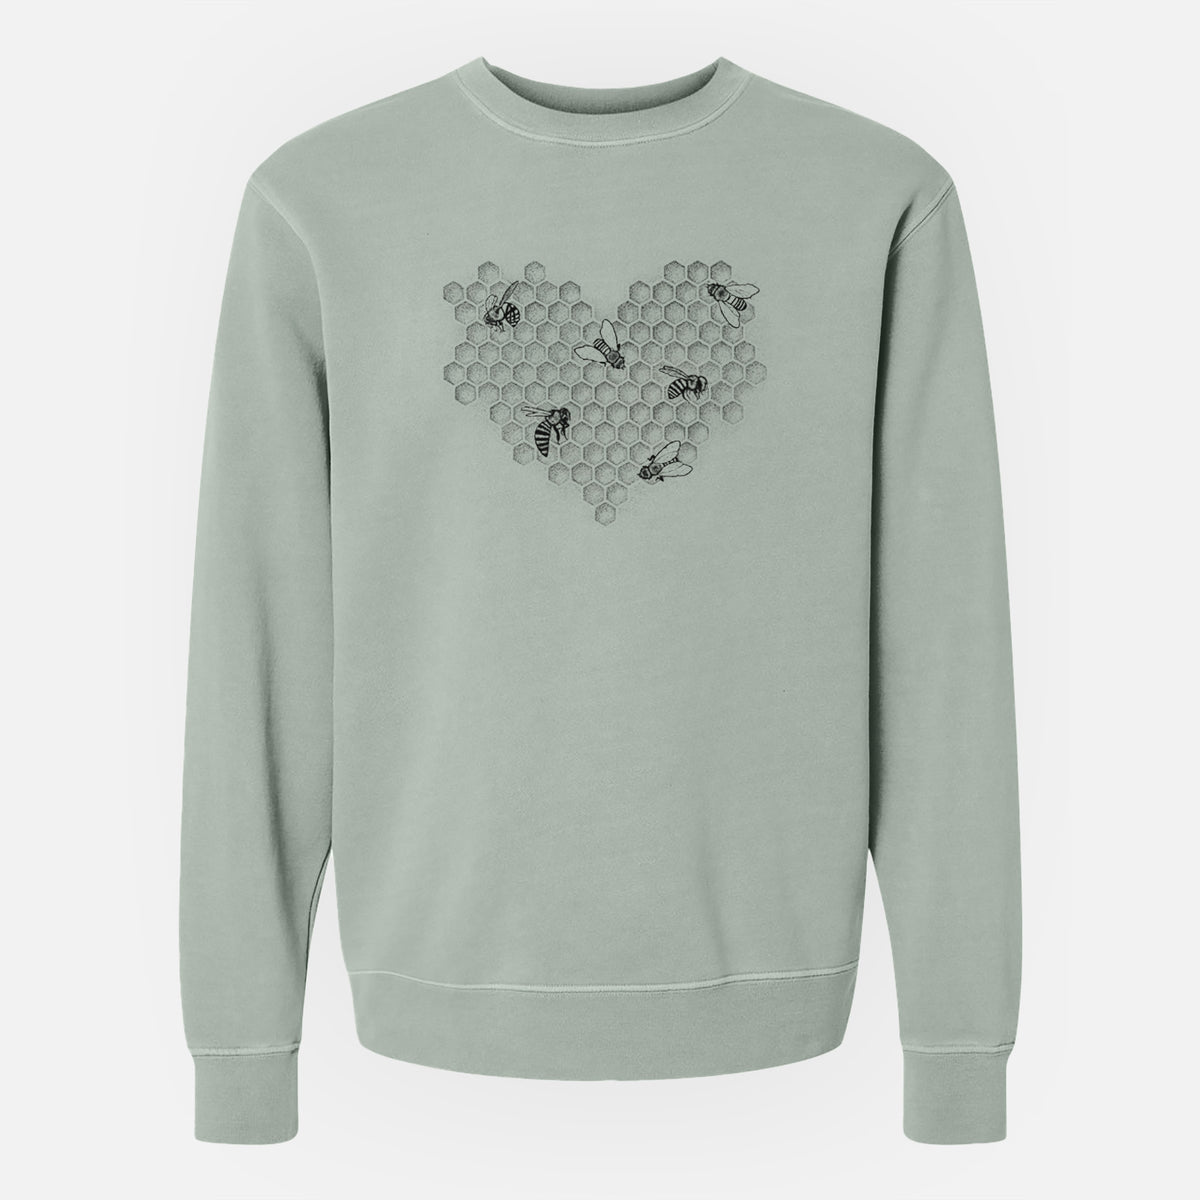 Honeycomb Heart with Bees - Unisex Pigment Dyed Crew Sweatshirt